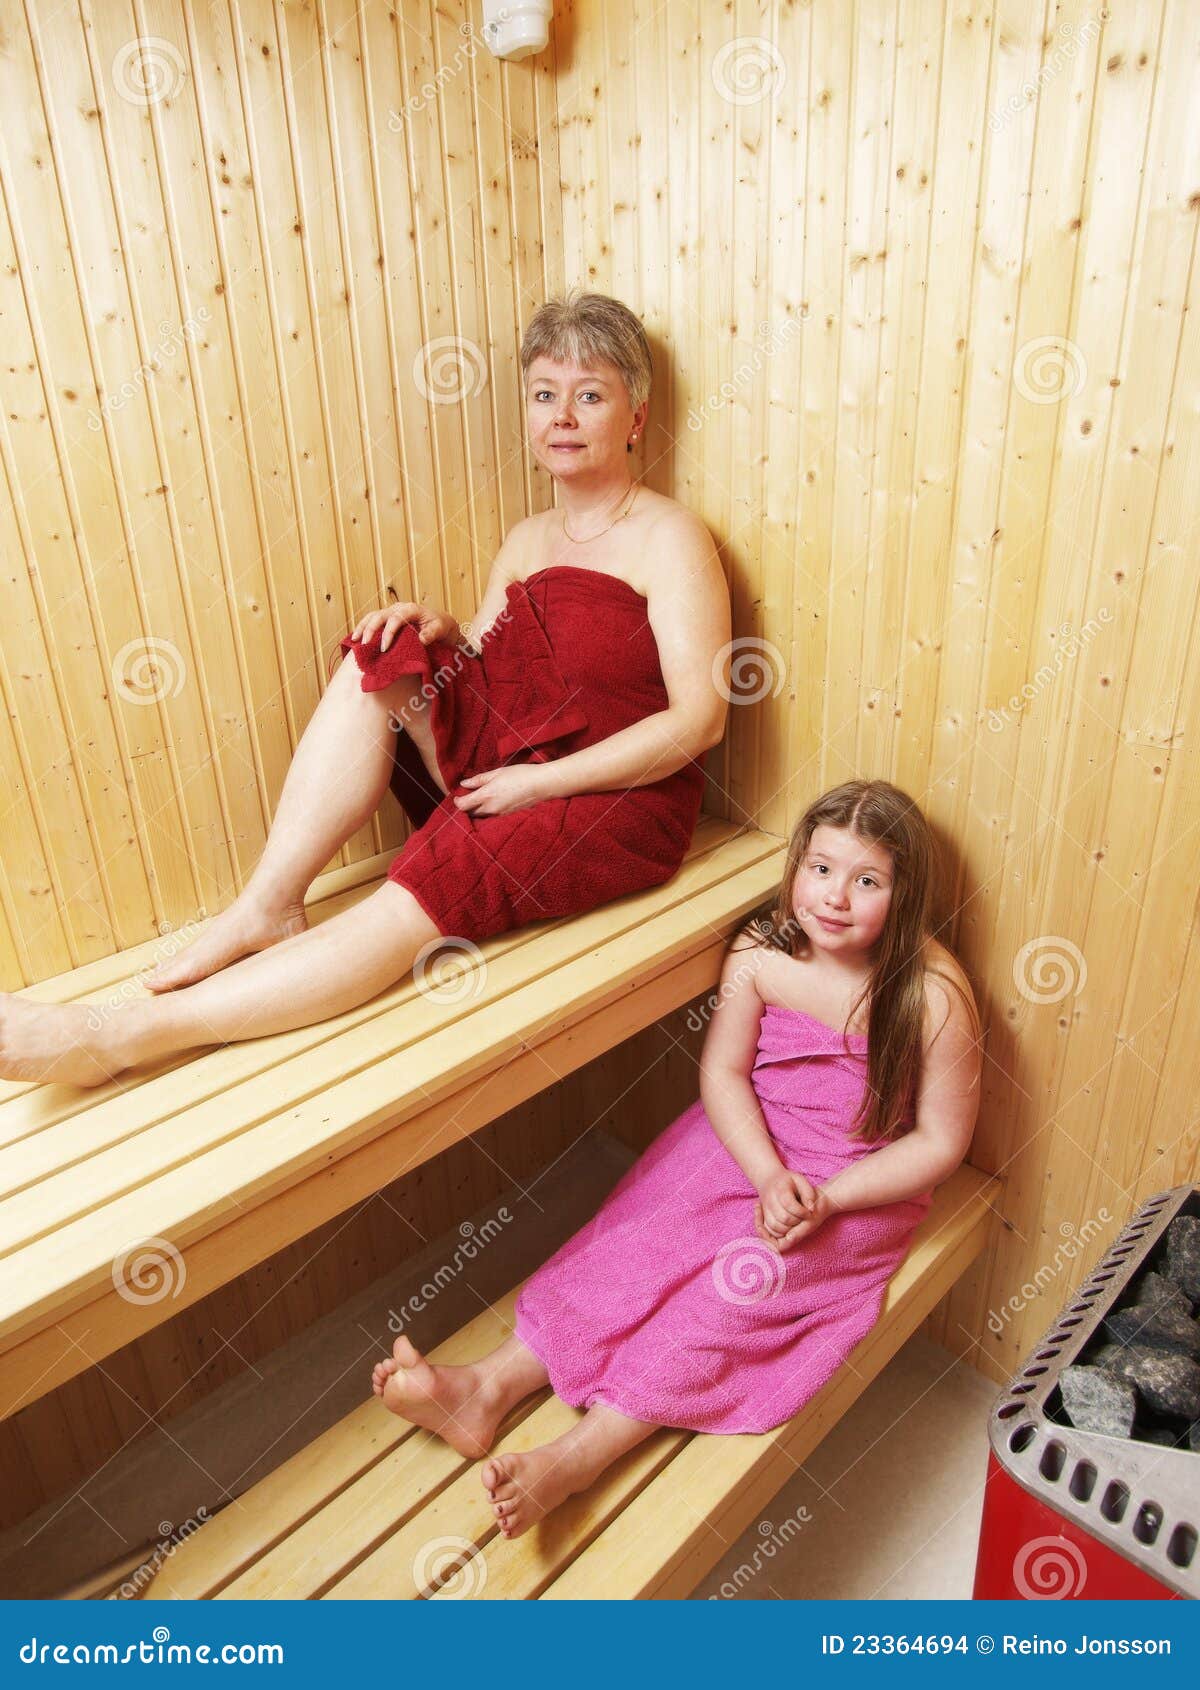 в бане голыми дети и родители фото 61